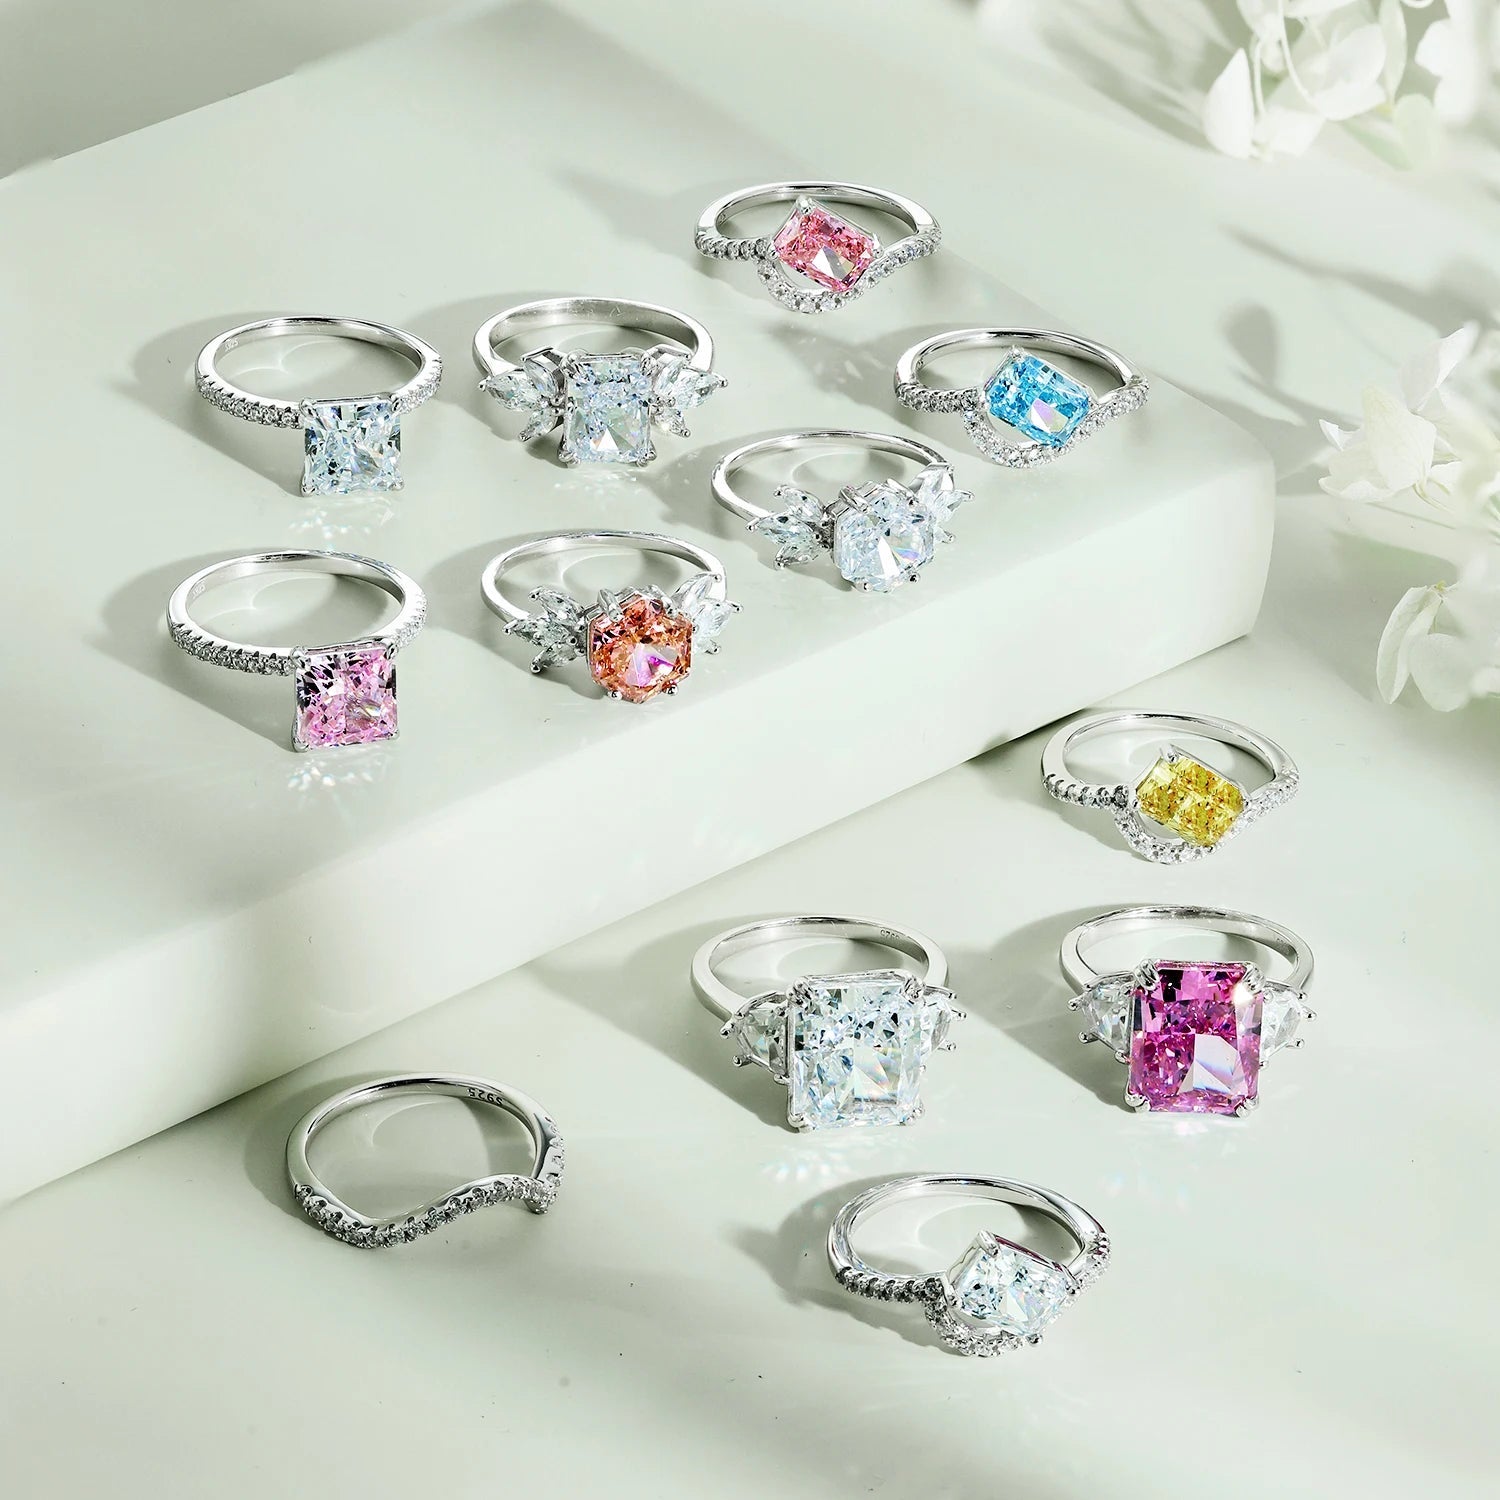 Bling Wedding Engagement Promise Ring - Lupine